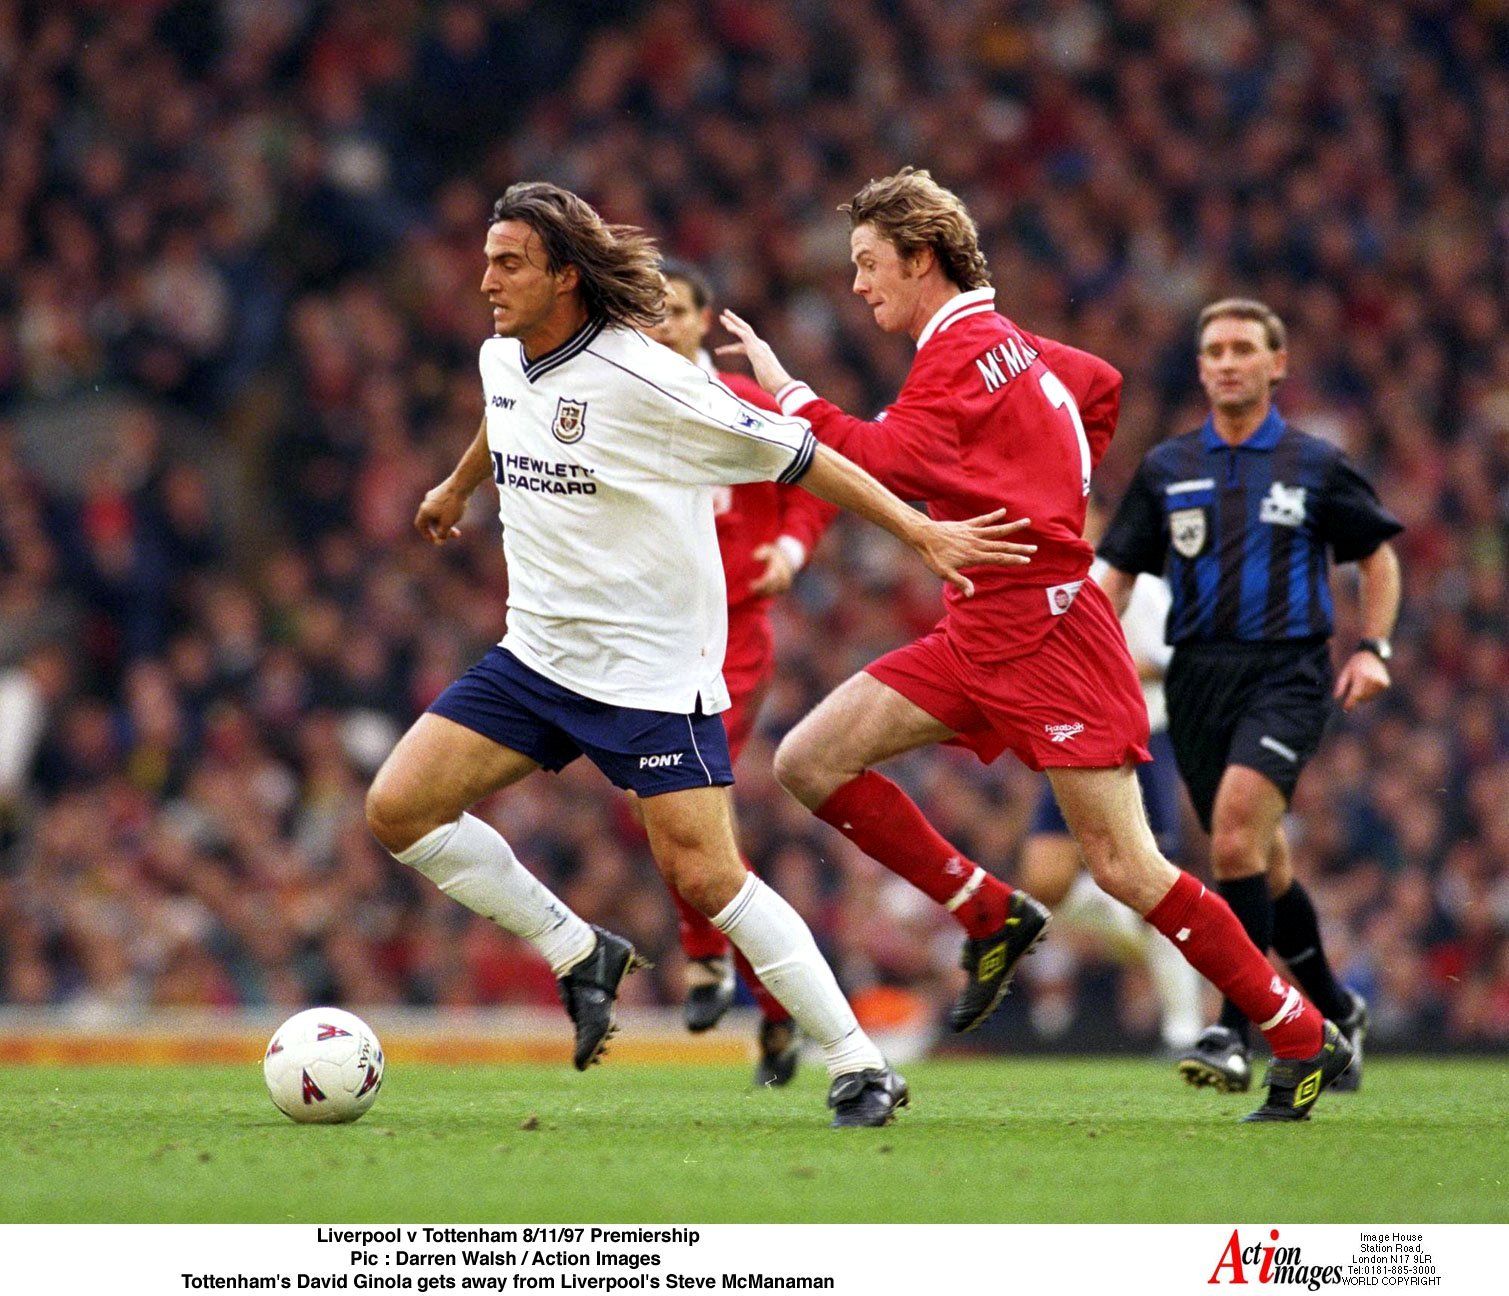 Liverpool v Tottenham 8/11/97 Premiership 
Pic : Darren Walsh / Action Images  
Tottenham's David Ginola gets away from Liverpool's Steve McManaman 
Tottenham Hotspur